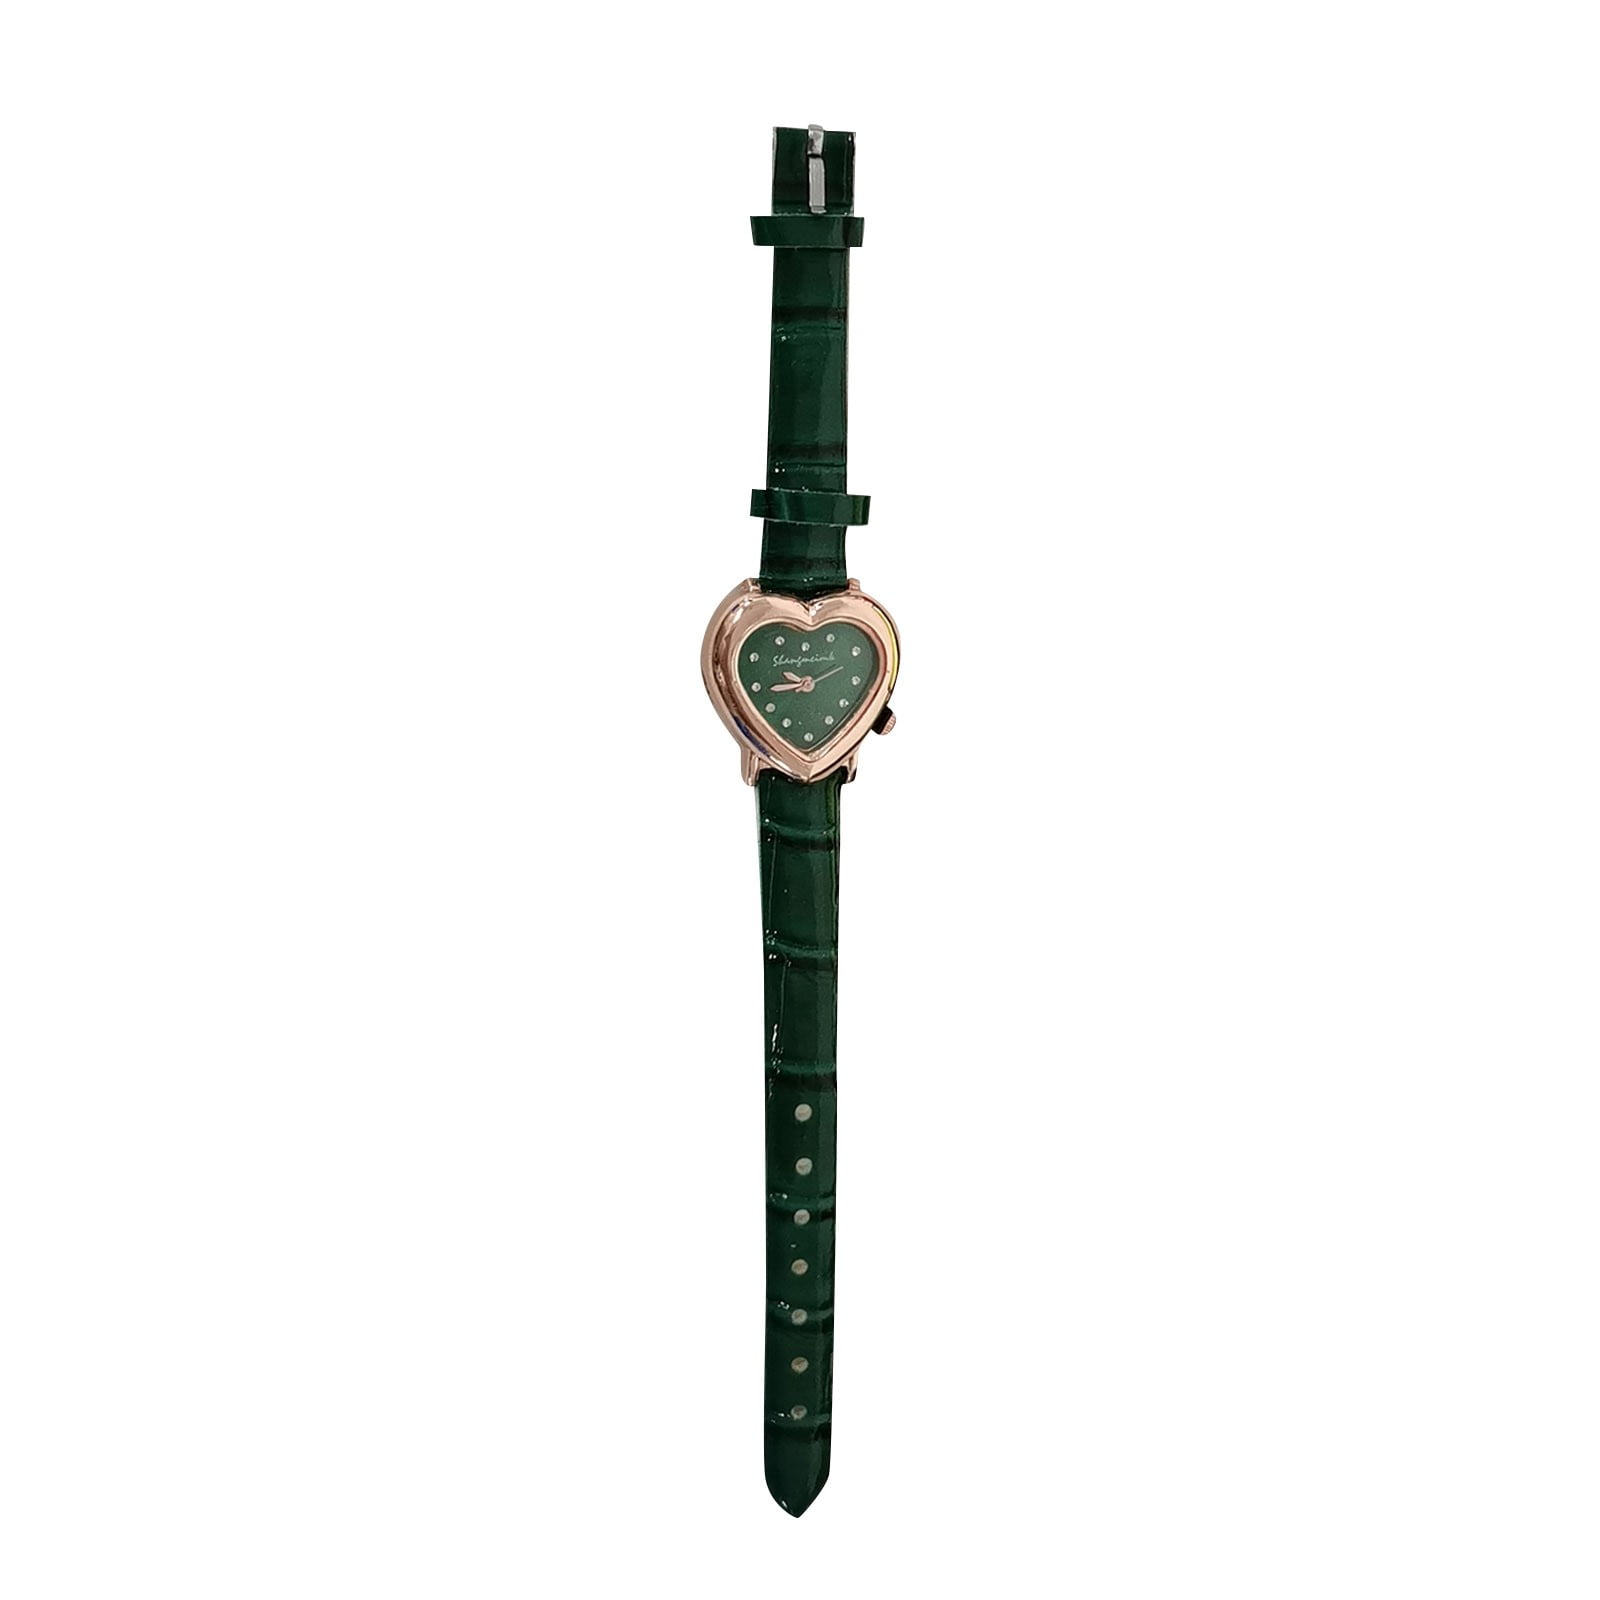 Rlmidhb Ladies' Digital Quartz Bracelet Watch Green One Size - Walmart.com